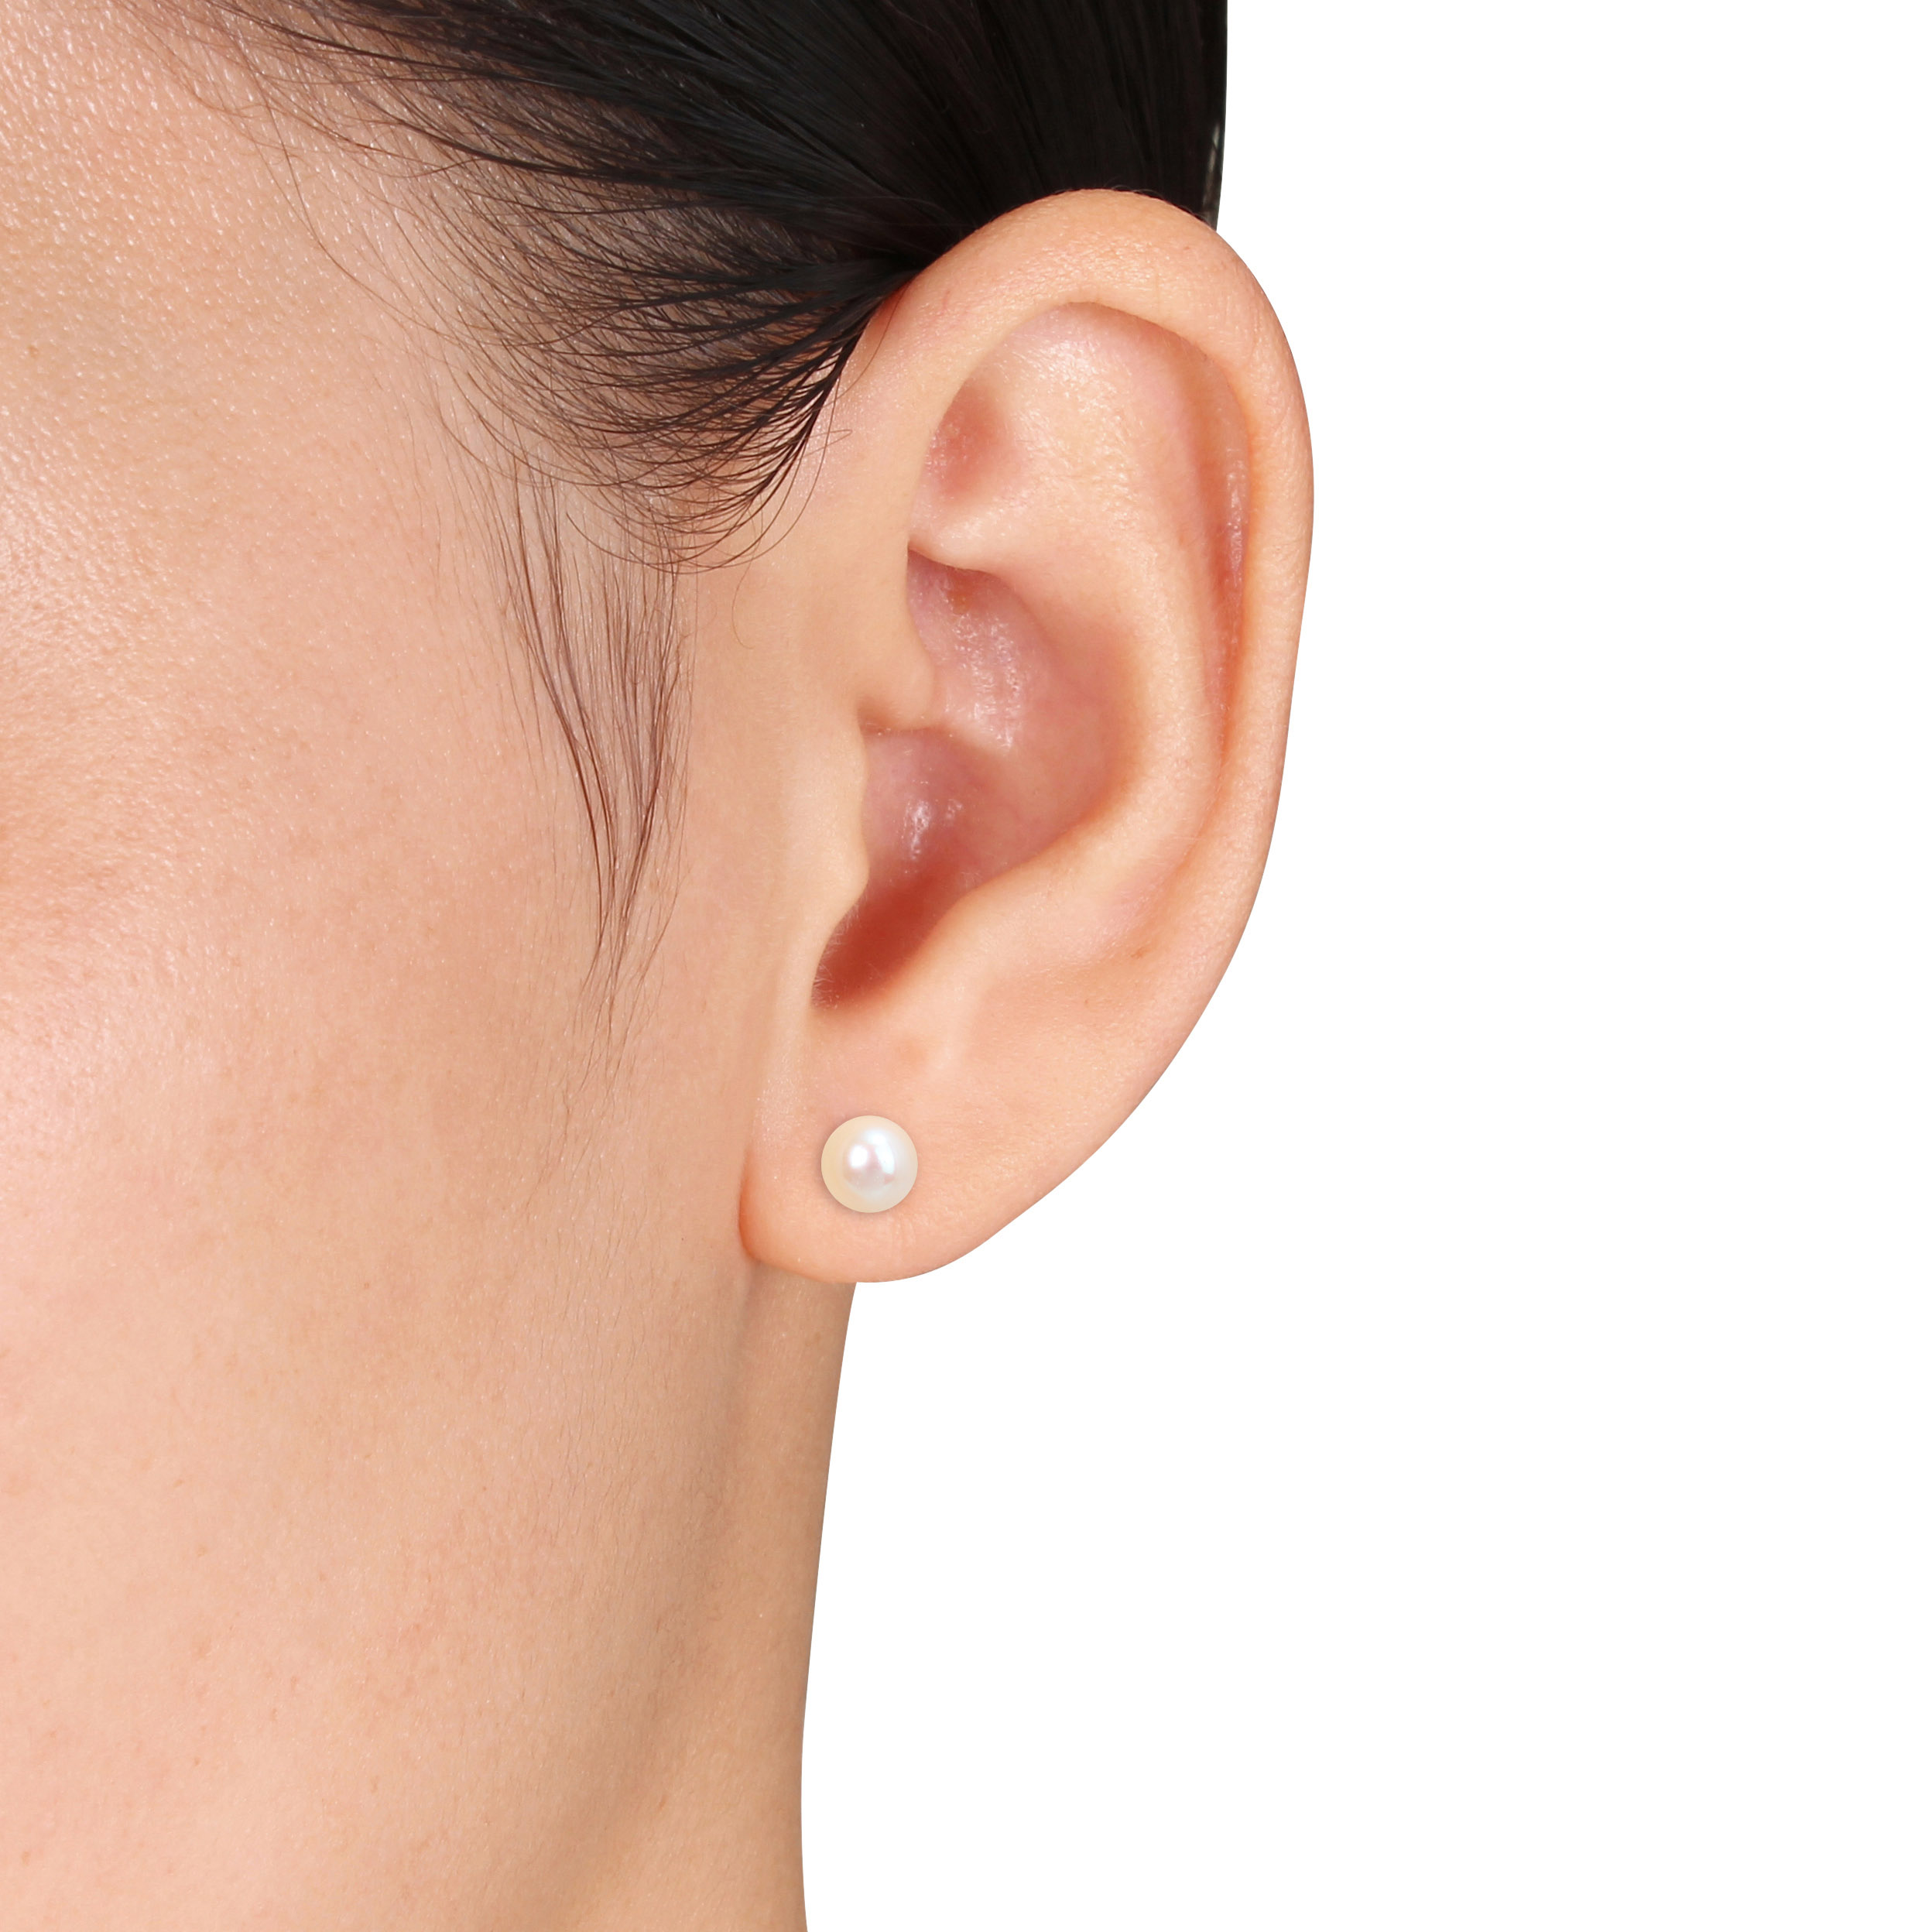 6 - 6.5 MM Cultured Freshwater Pearl Stud Earrings in 14k Yellow Gold